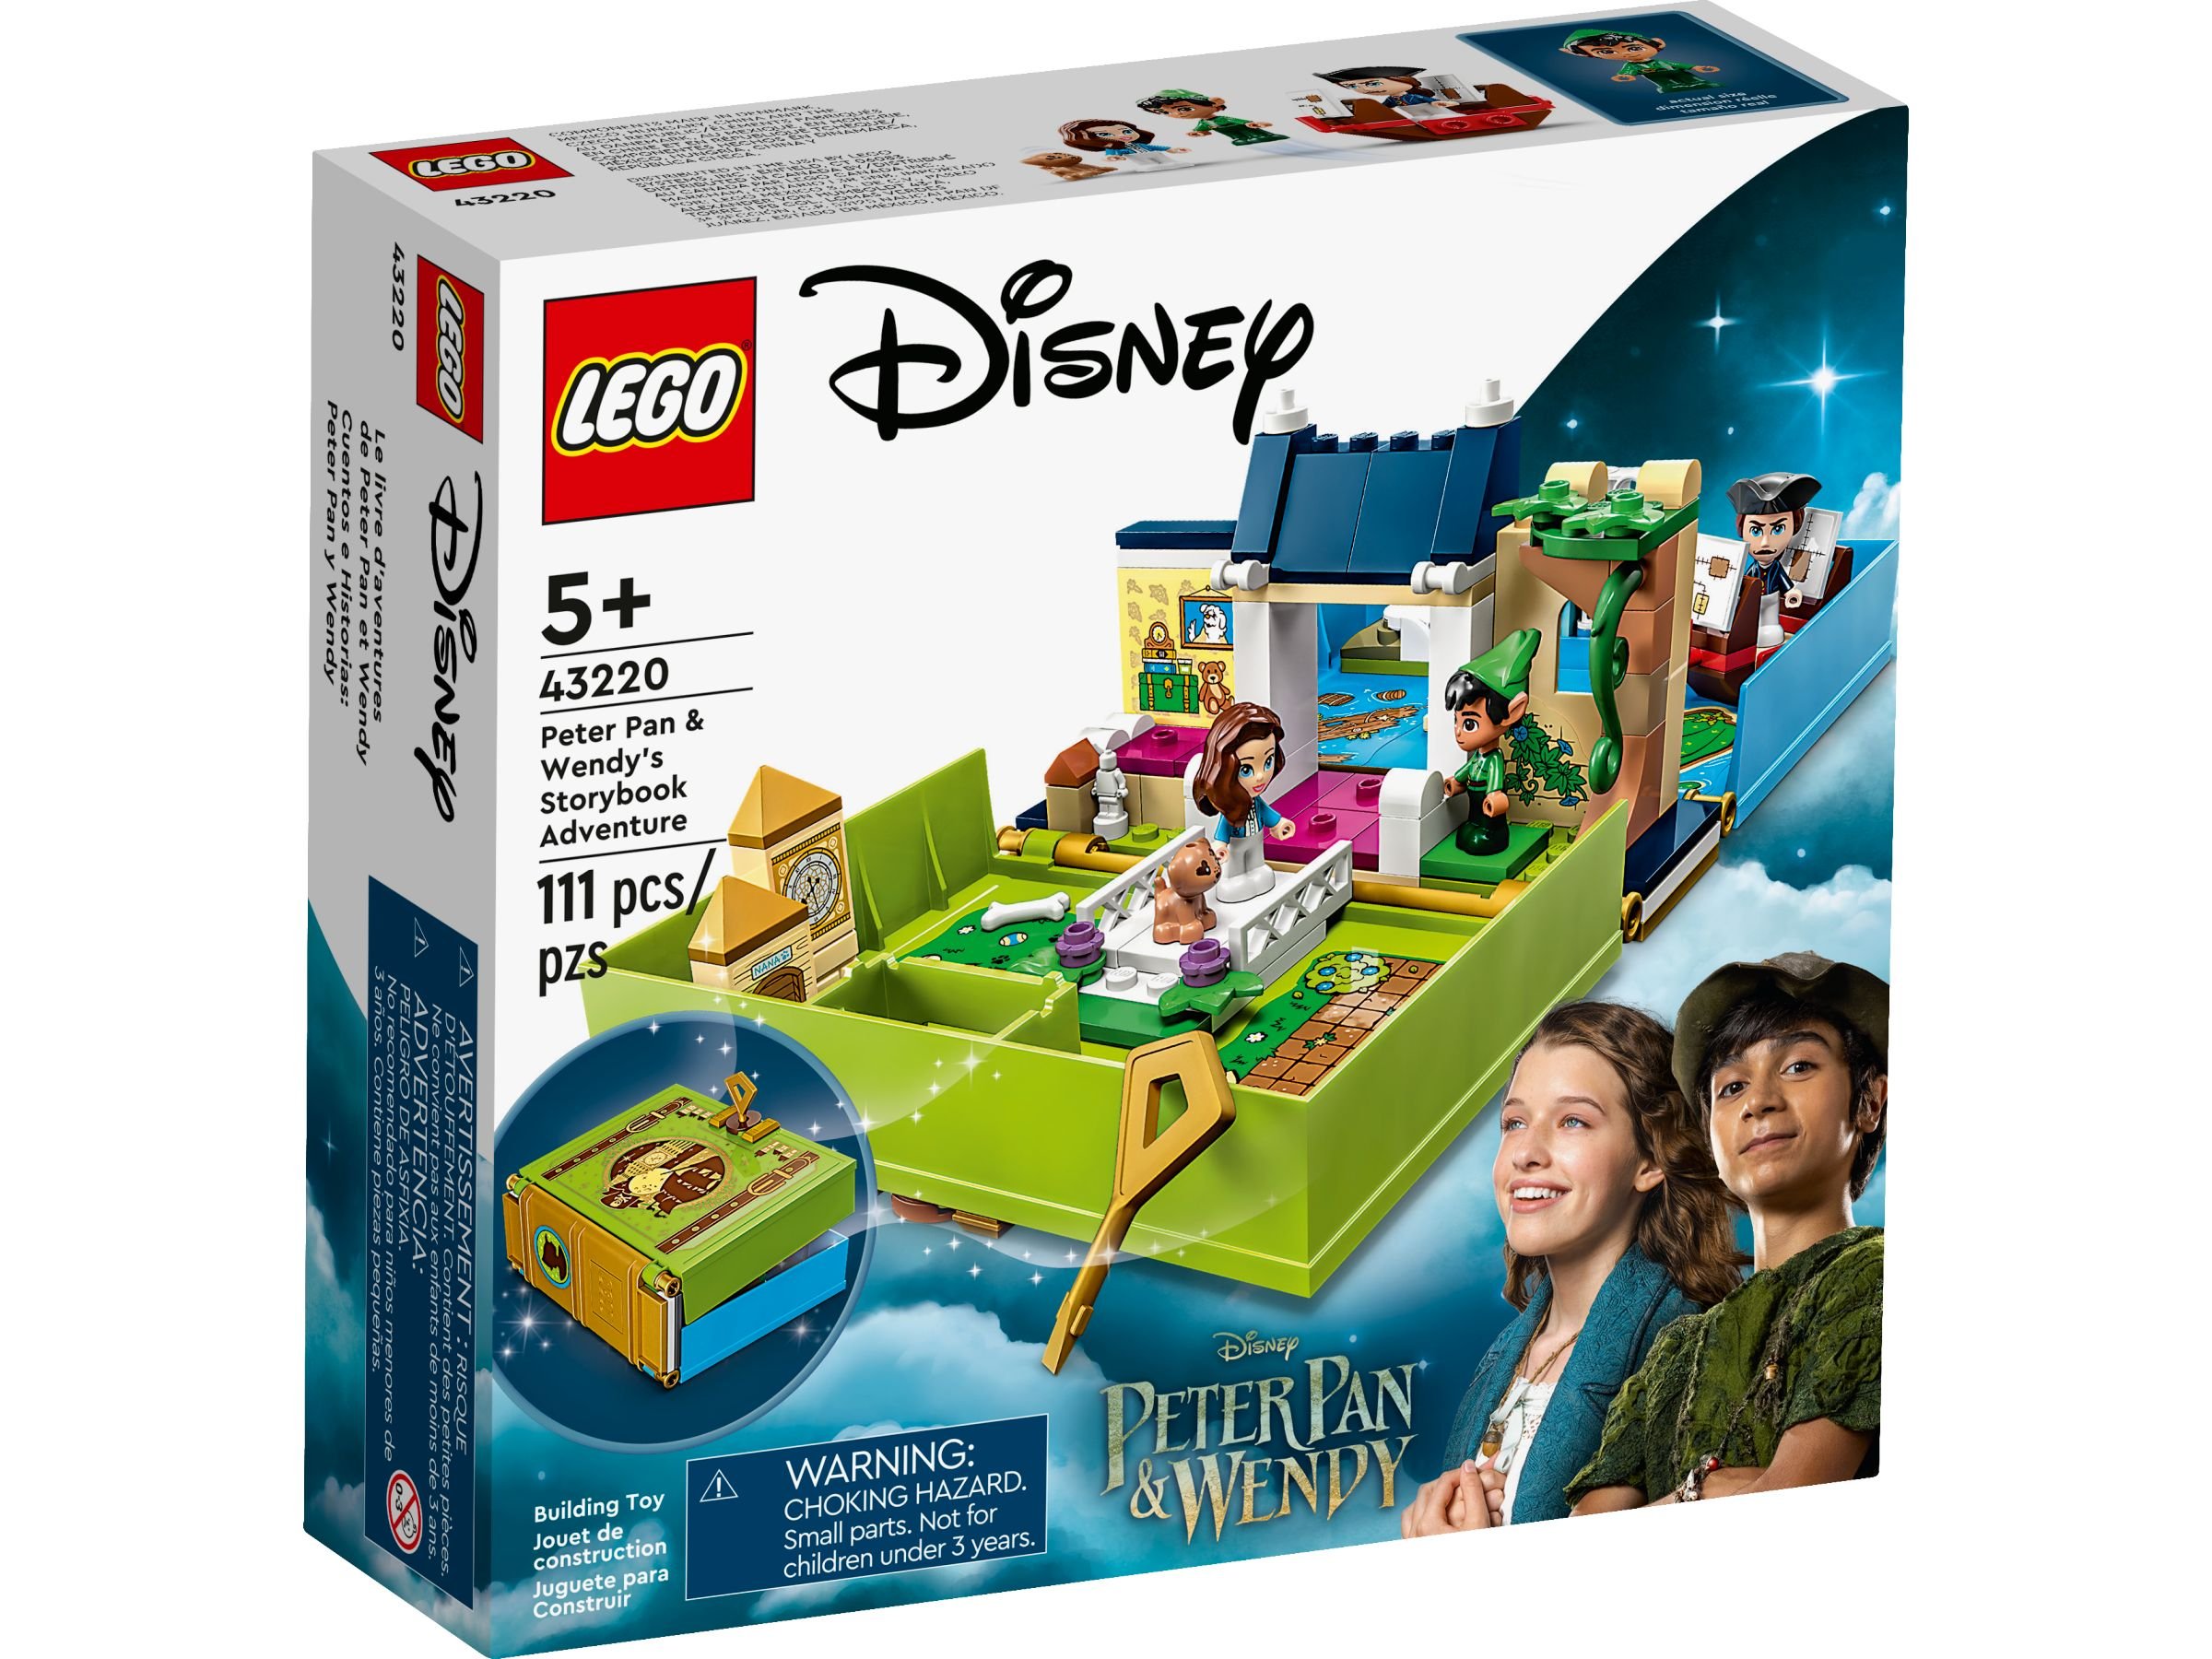 LEGO Disney 43220 Peter Pan & Wendy – Märchenbuch-Abenteuer LEGO_43220_alt1.jpg